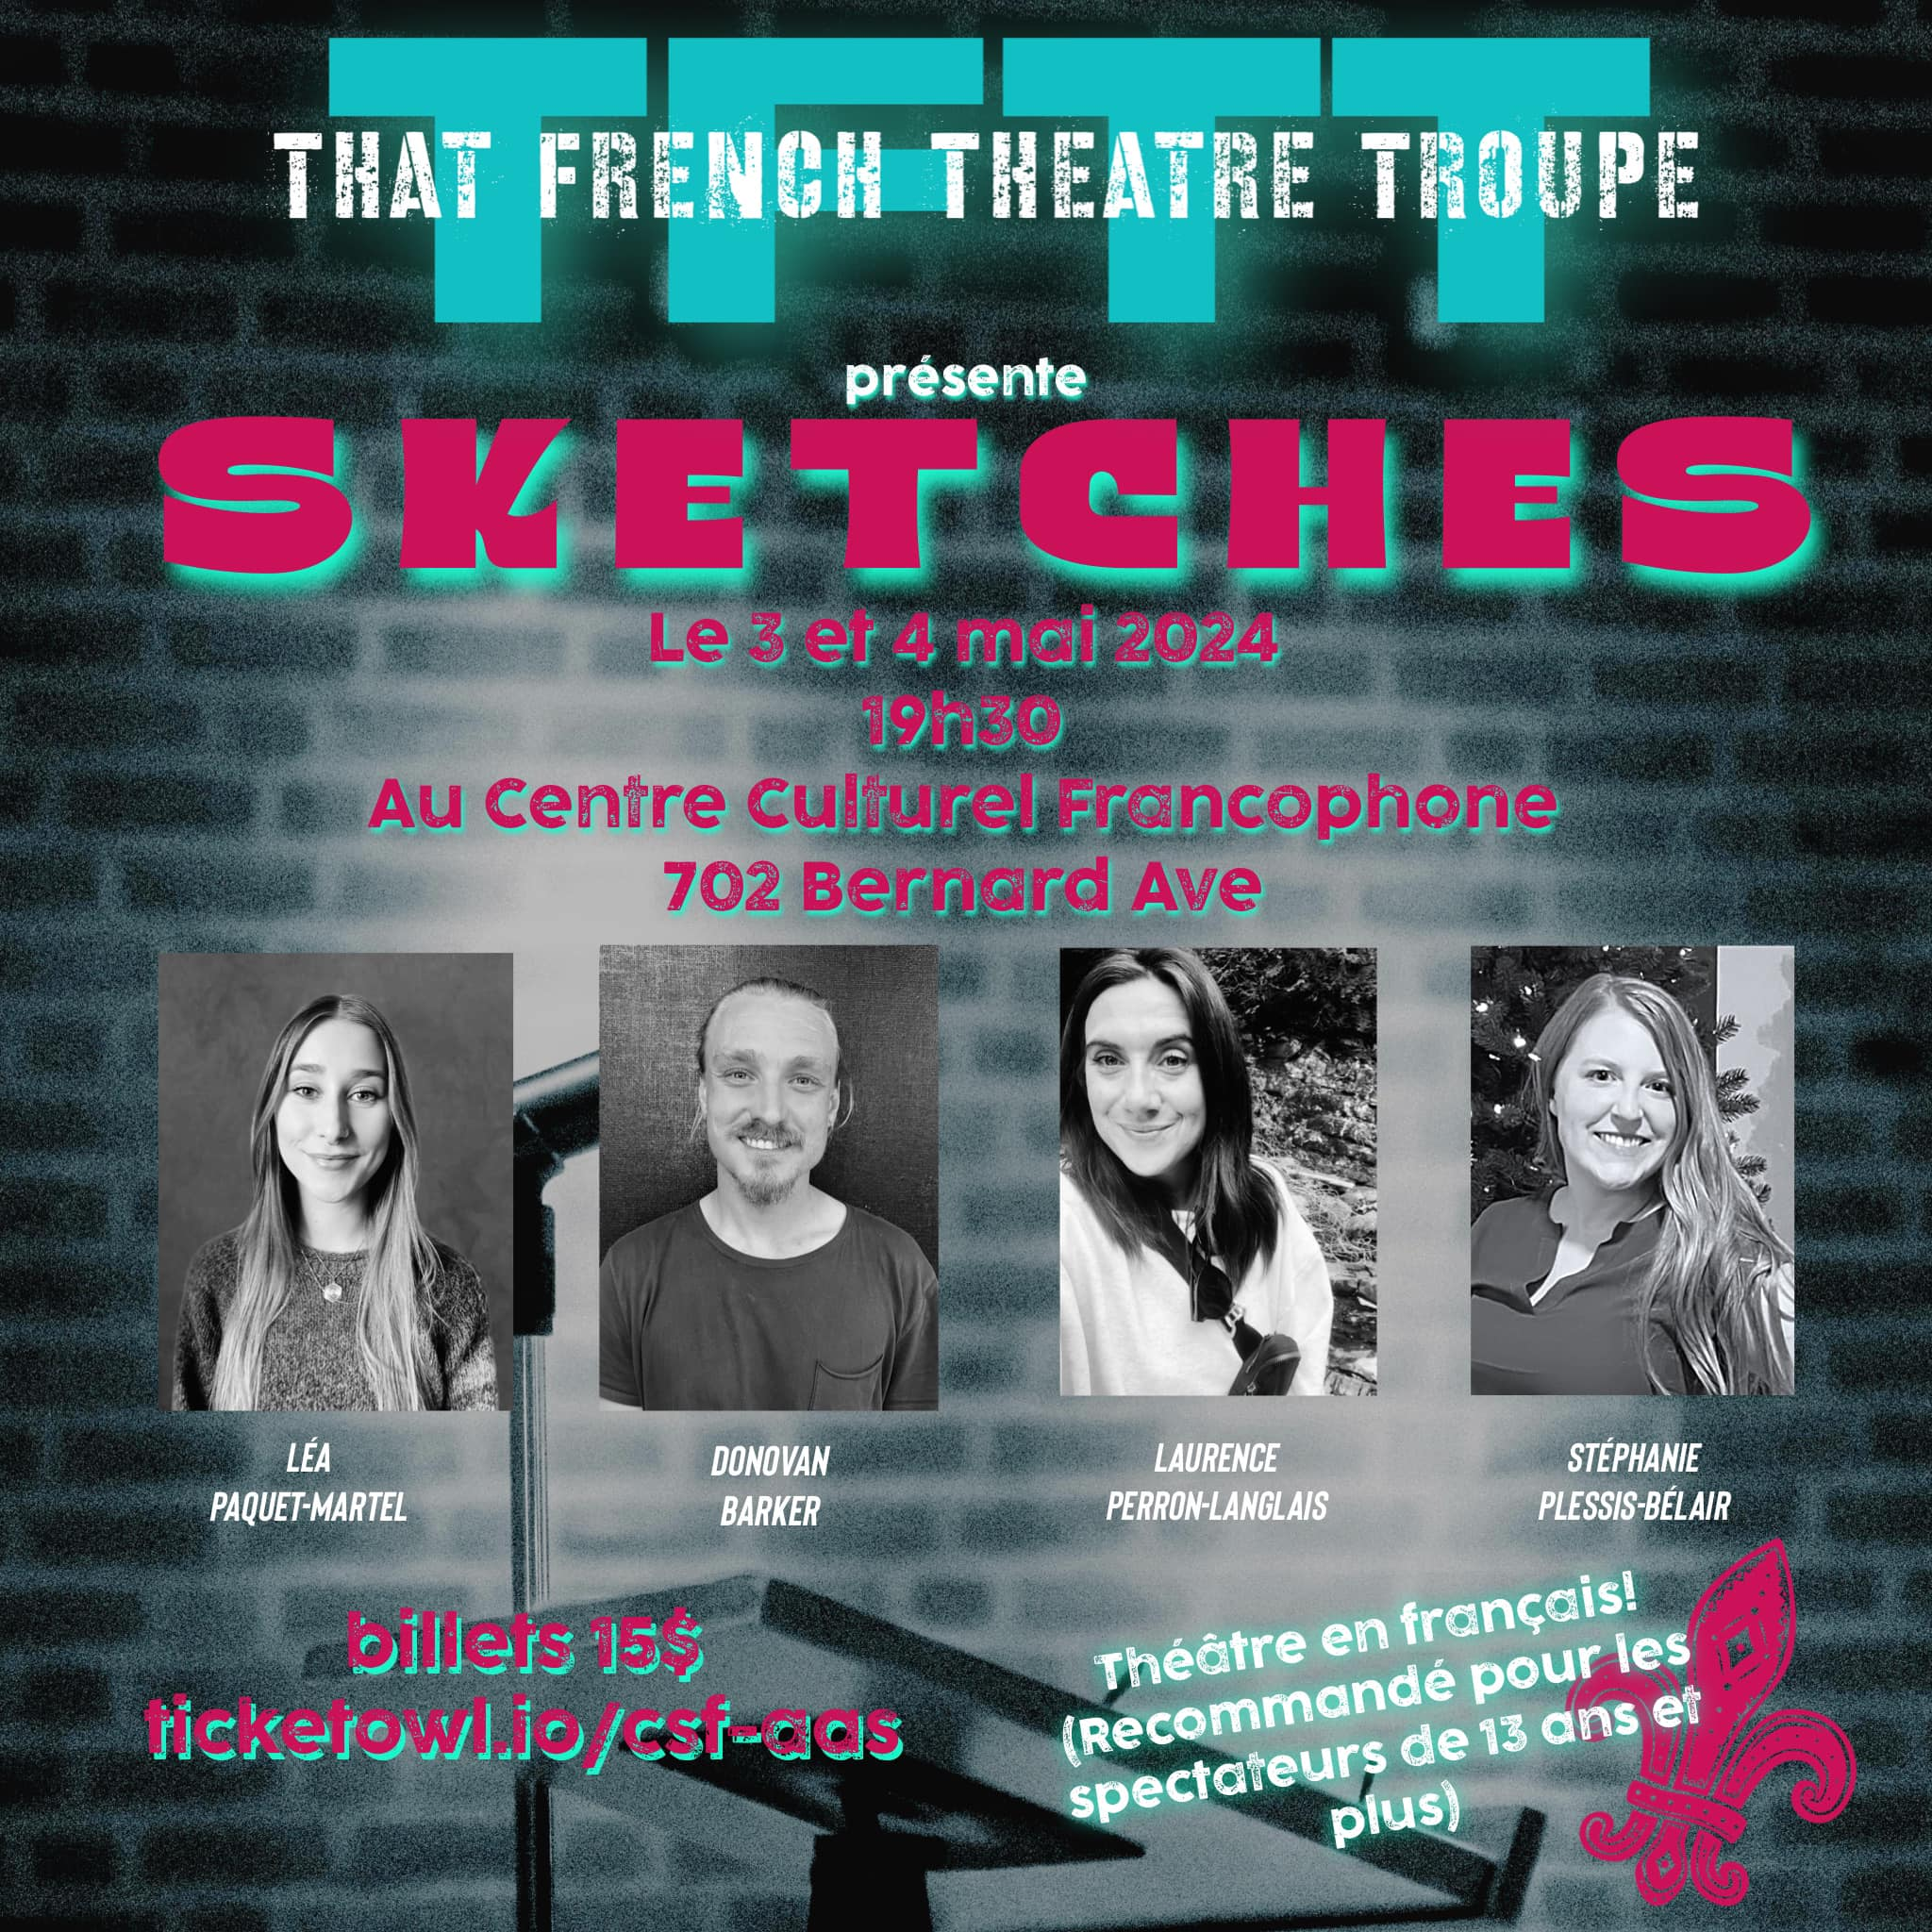 That French Theatre Troupe presente, "SKETCHES"